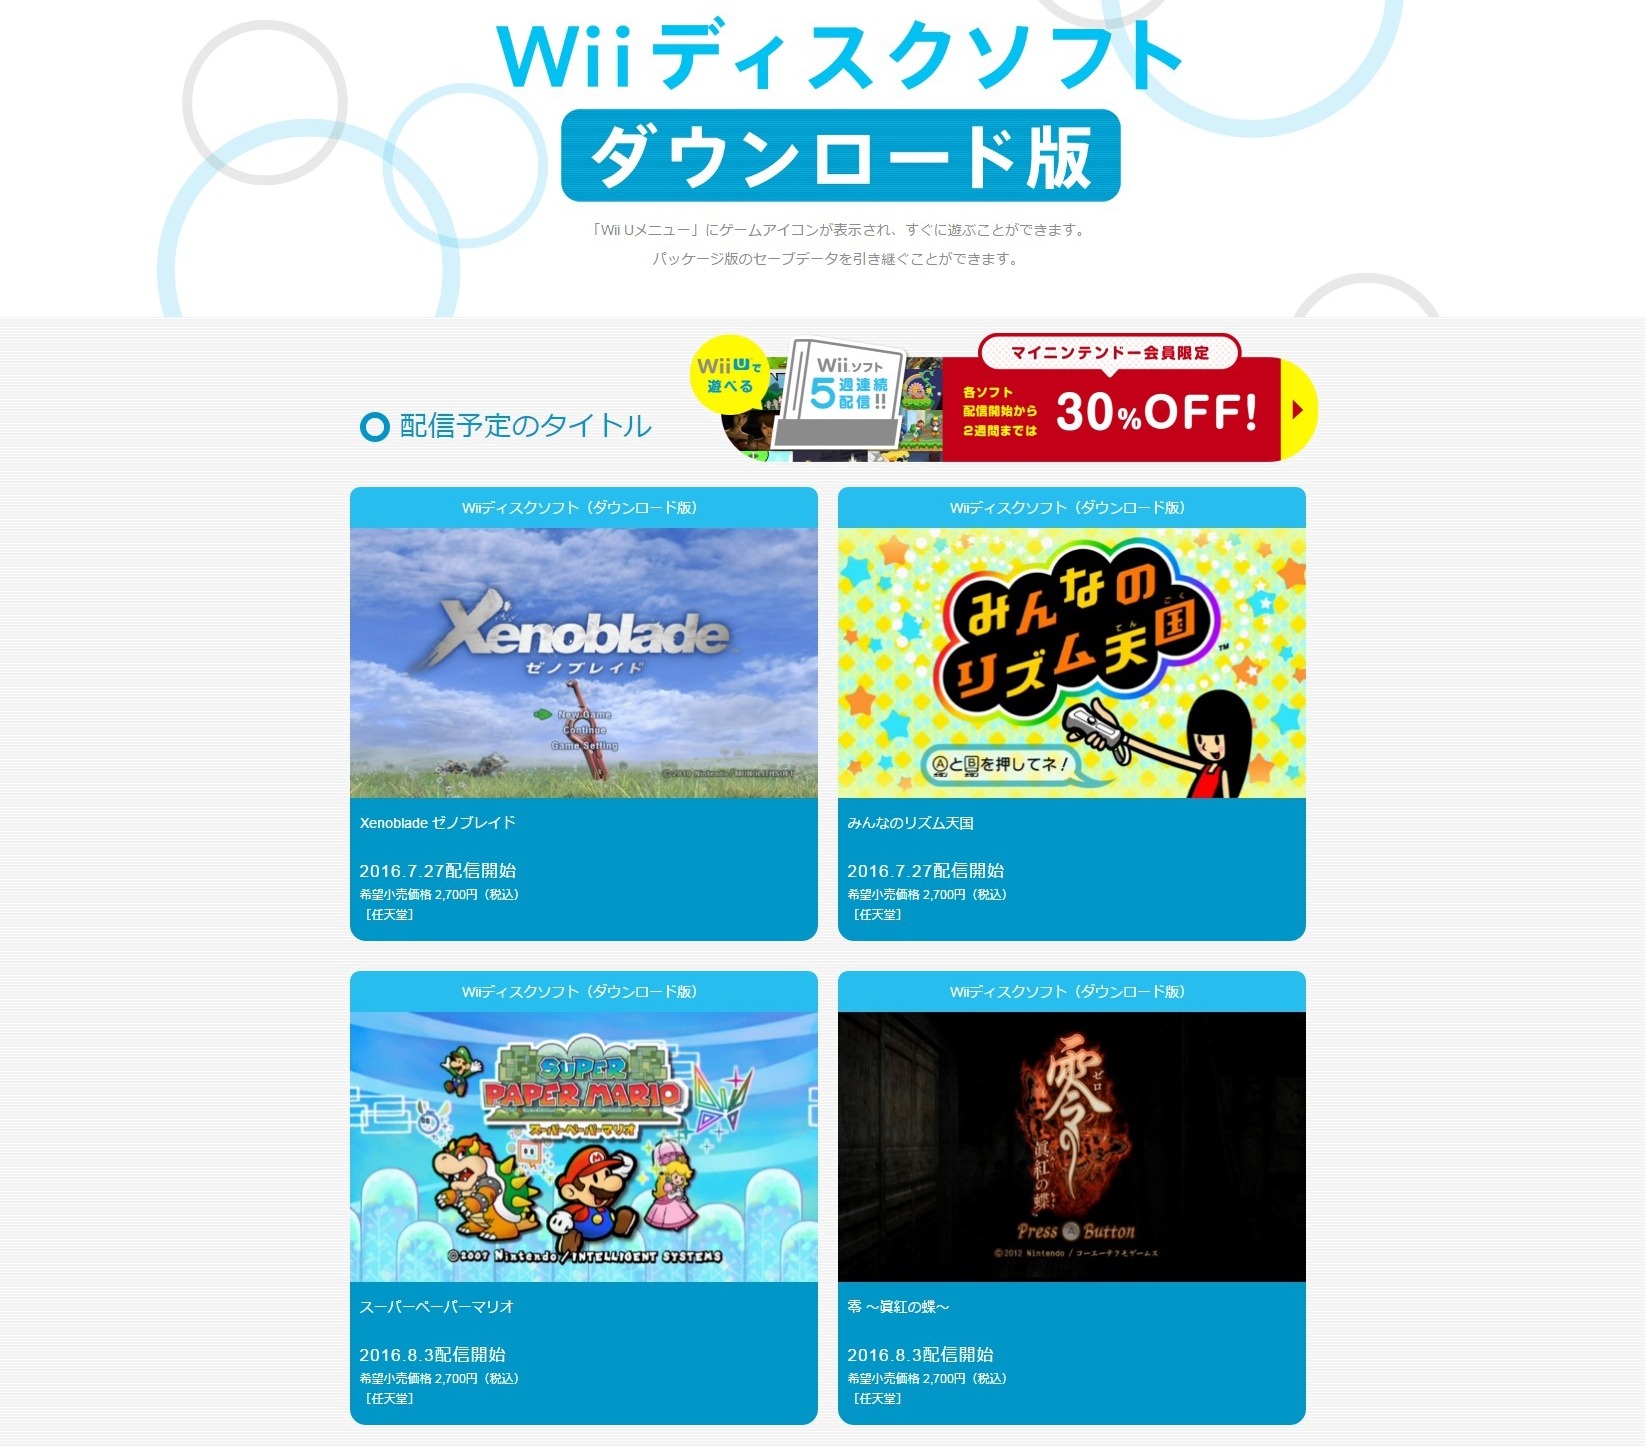 Wii U向けWiiソフト『ゼノブレイド』『スーパーペーパーマリオ